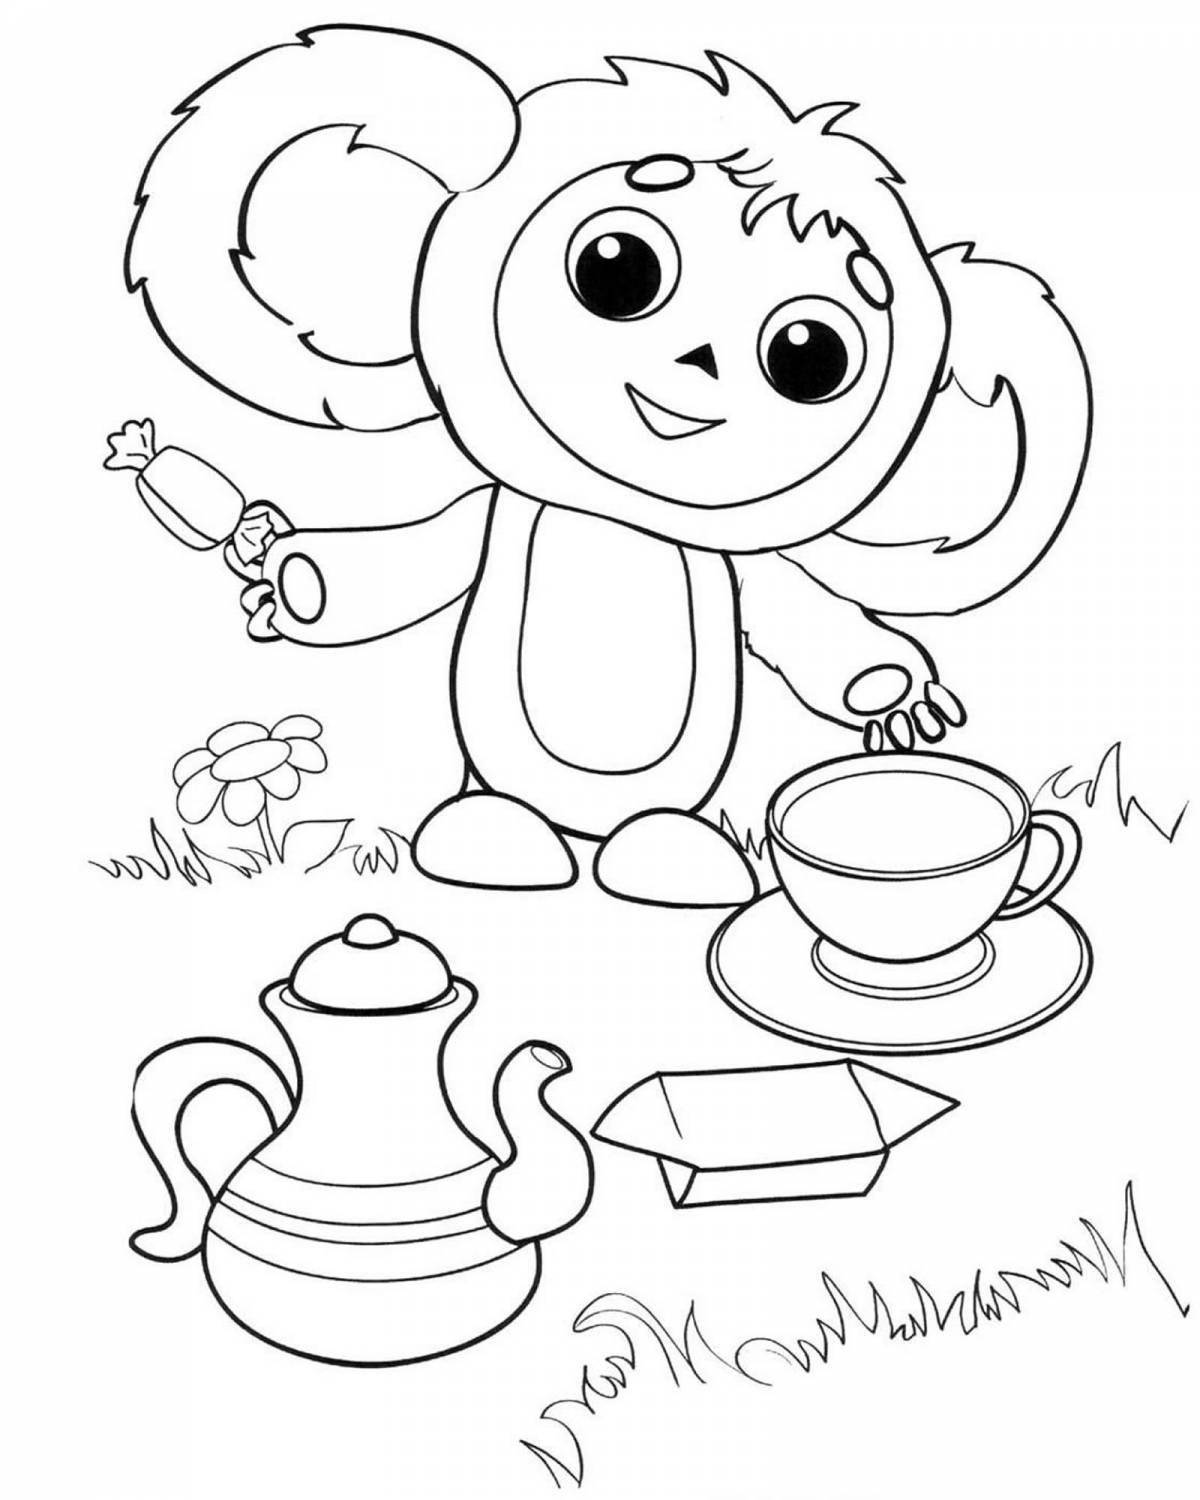 Cheburashka stimulating coloring book for preschoolers